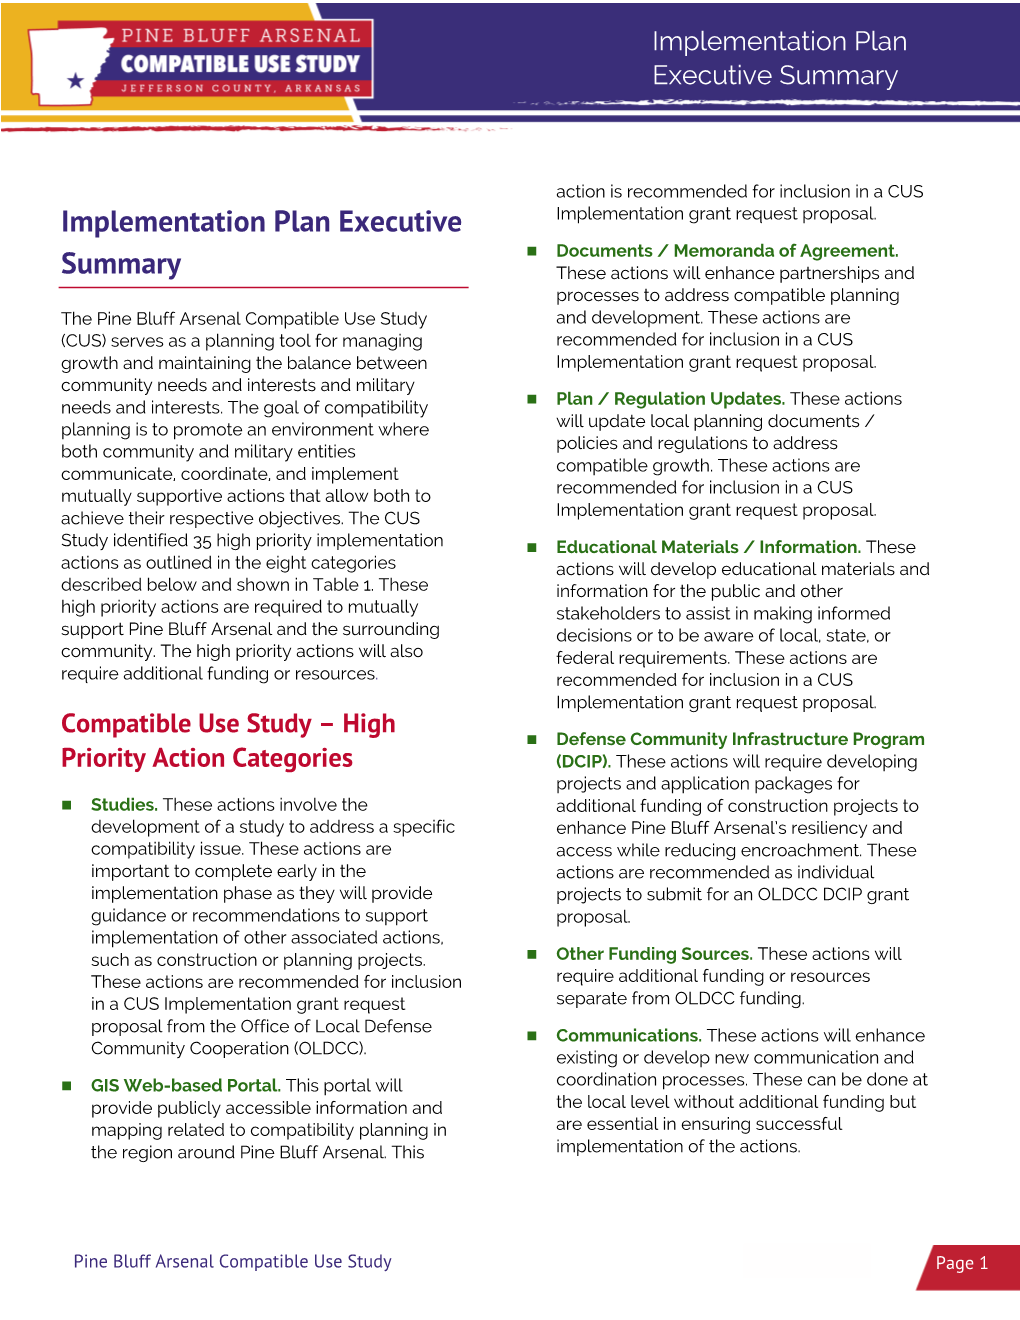 Implementation Plan Executive Summary